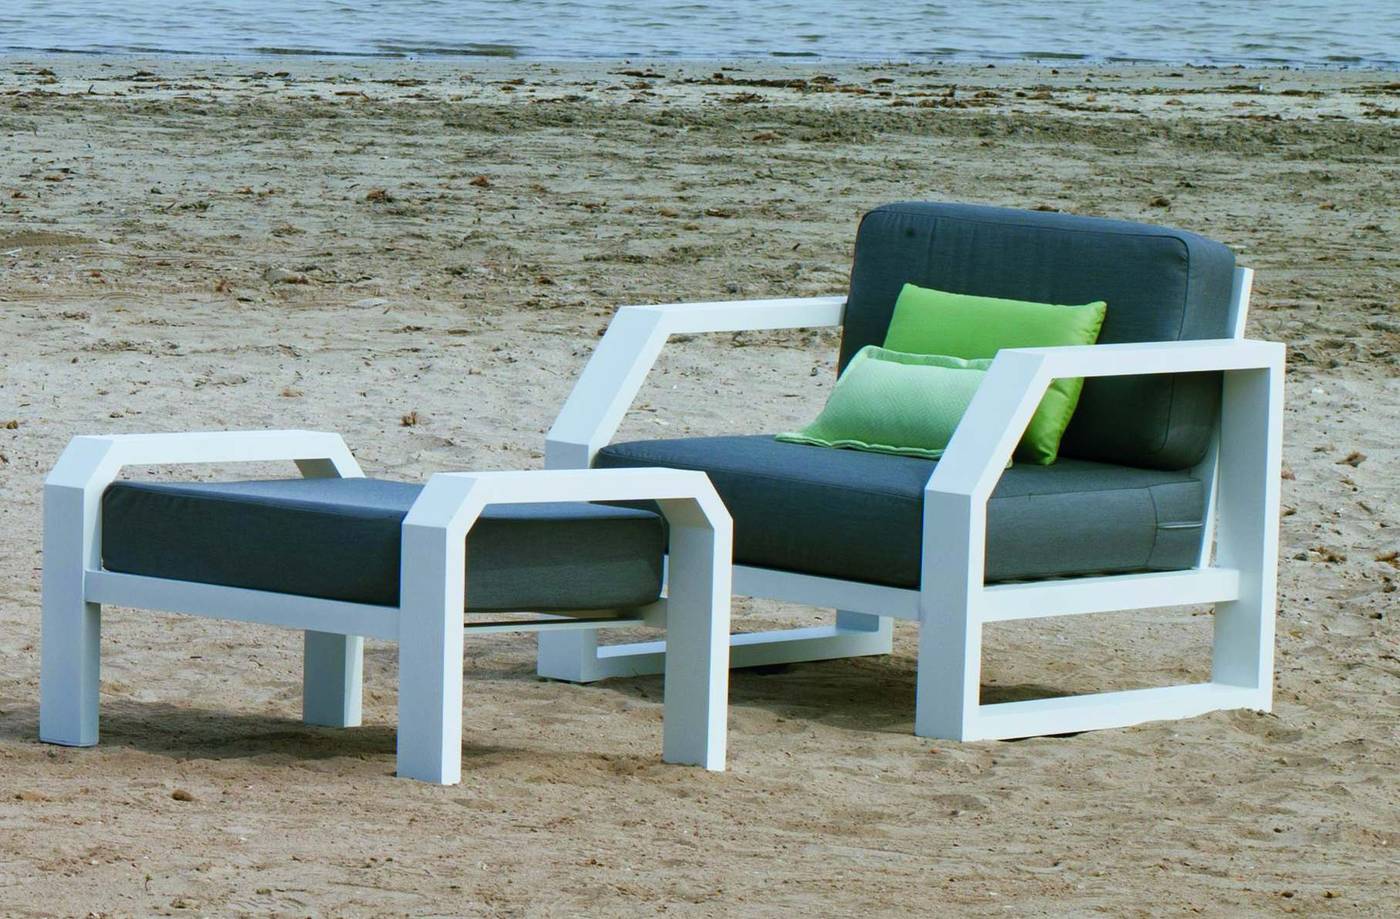 Set Aluminio Luxe Zafiro-10 - Conjunto lujo de aluminio: 1 sofá de 3 plazas + 2 sillones + 1 mesa de centro + 2 reposapiés. Disponible en color blanco, antracita, champagne, plata o marrón